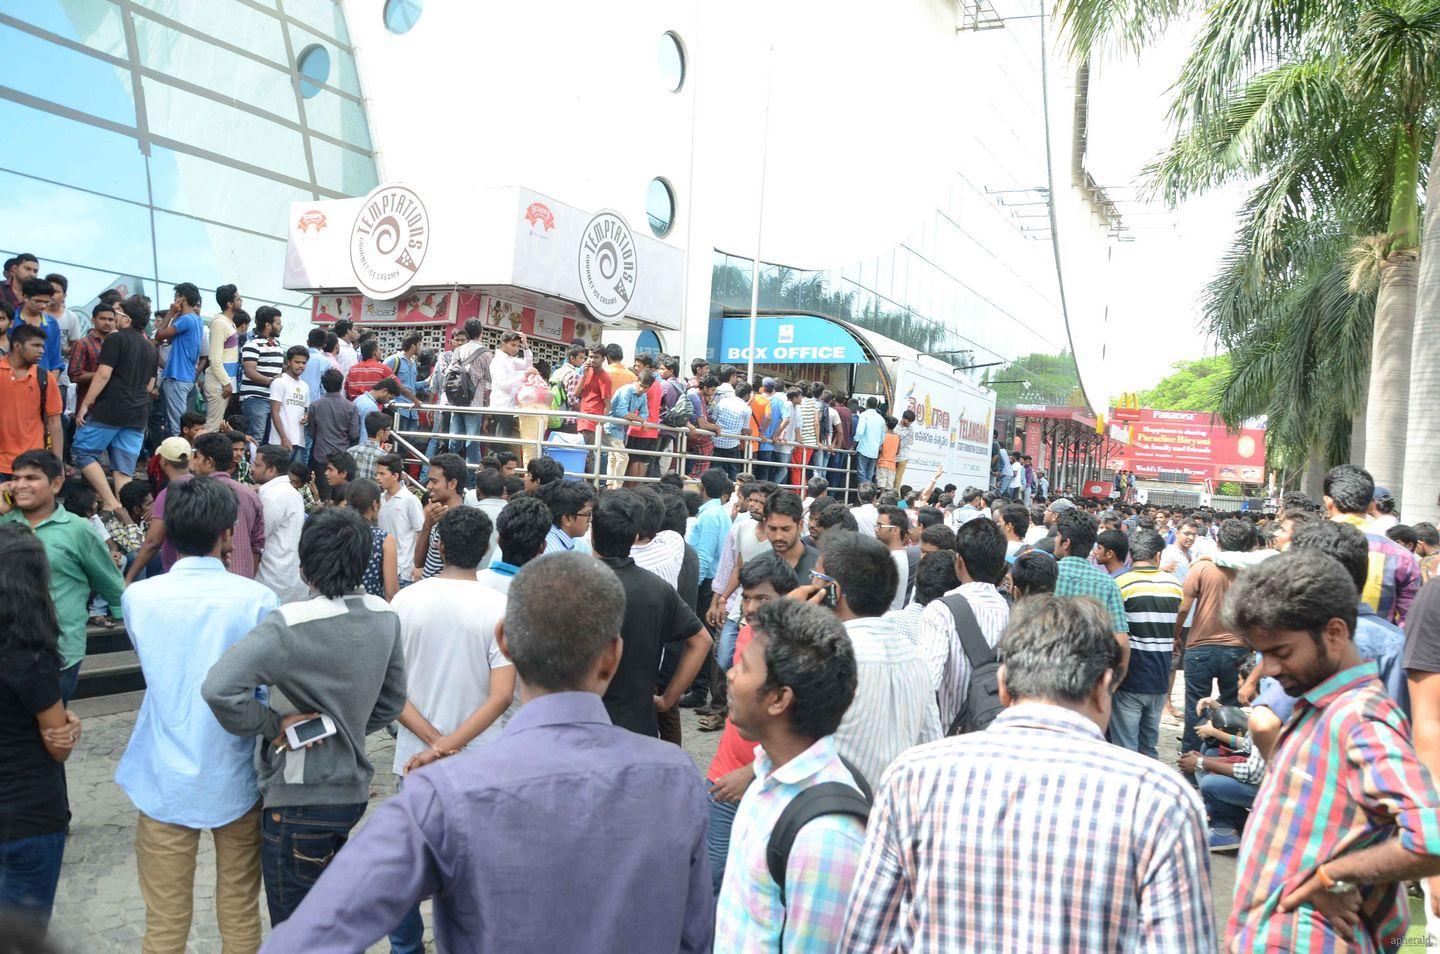 People waiting for Baahubali tickets at Prasads Imax 